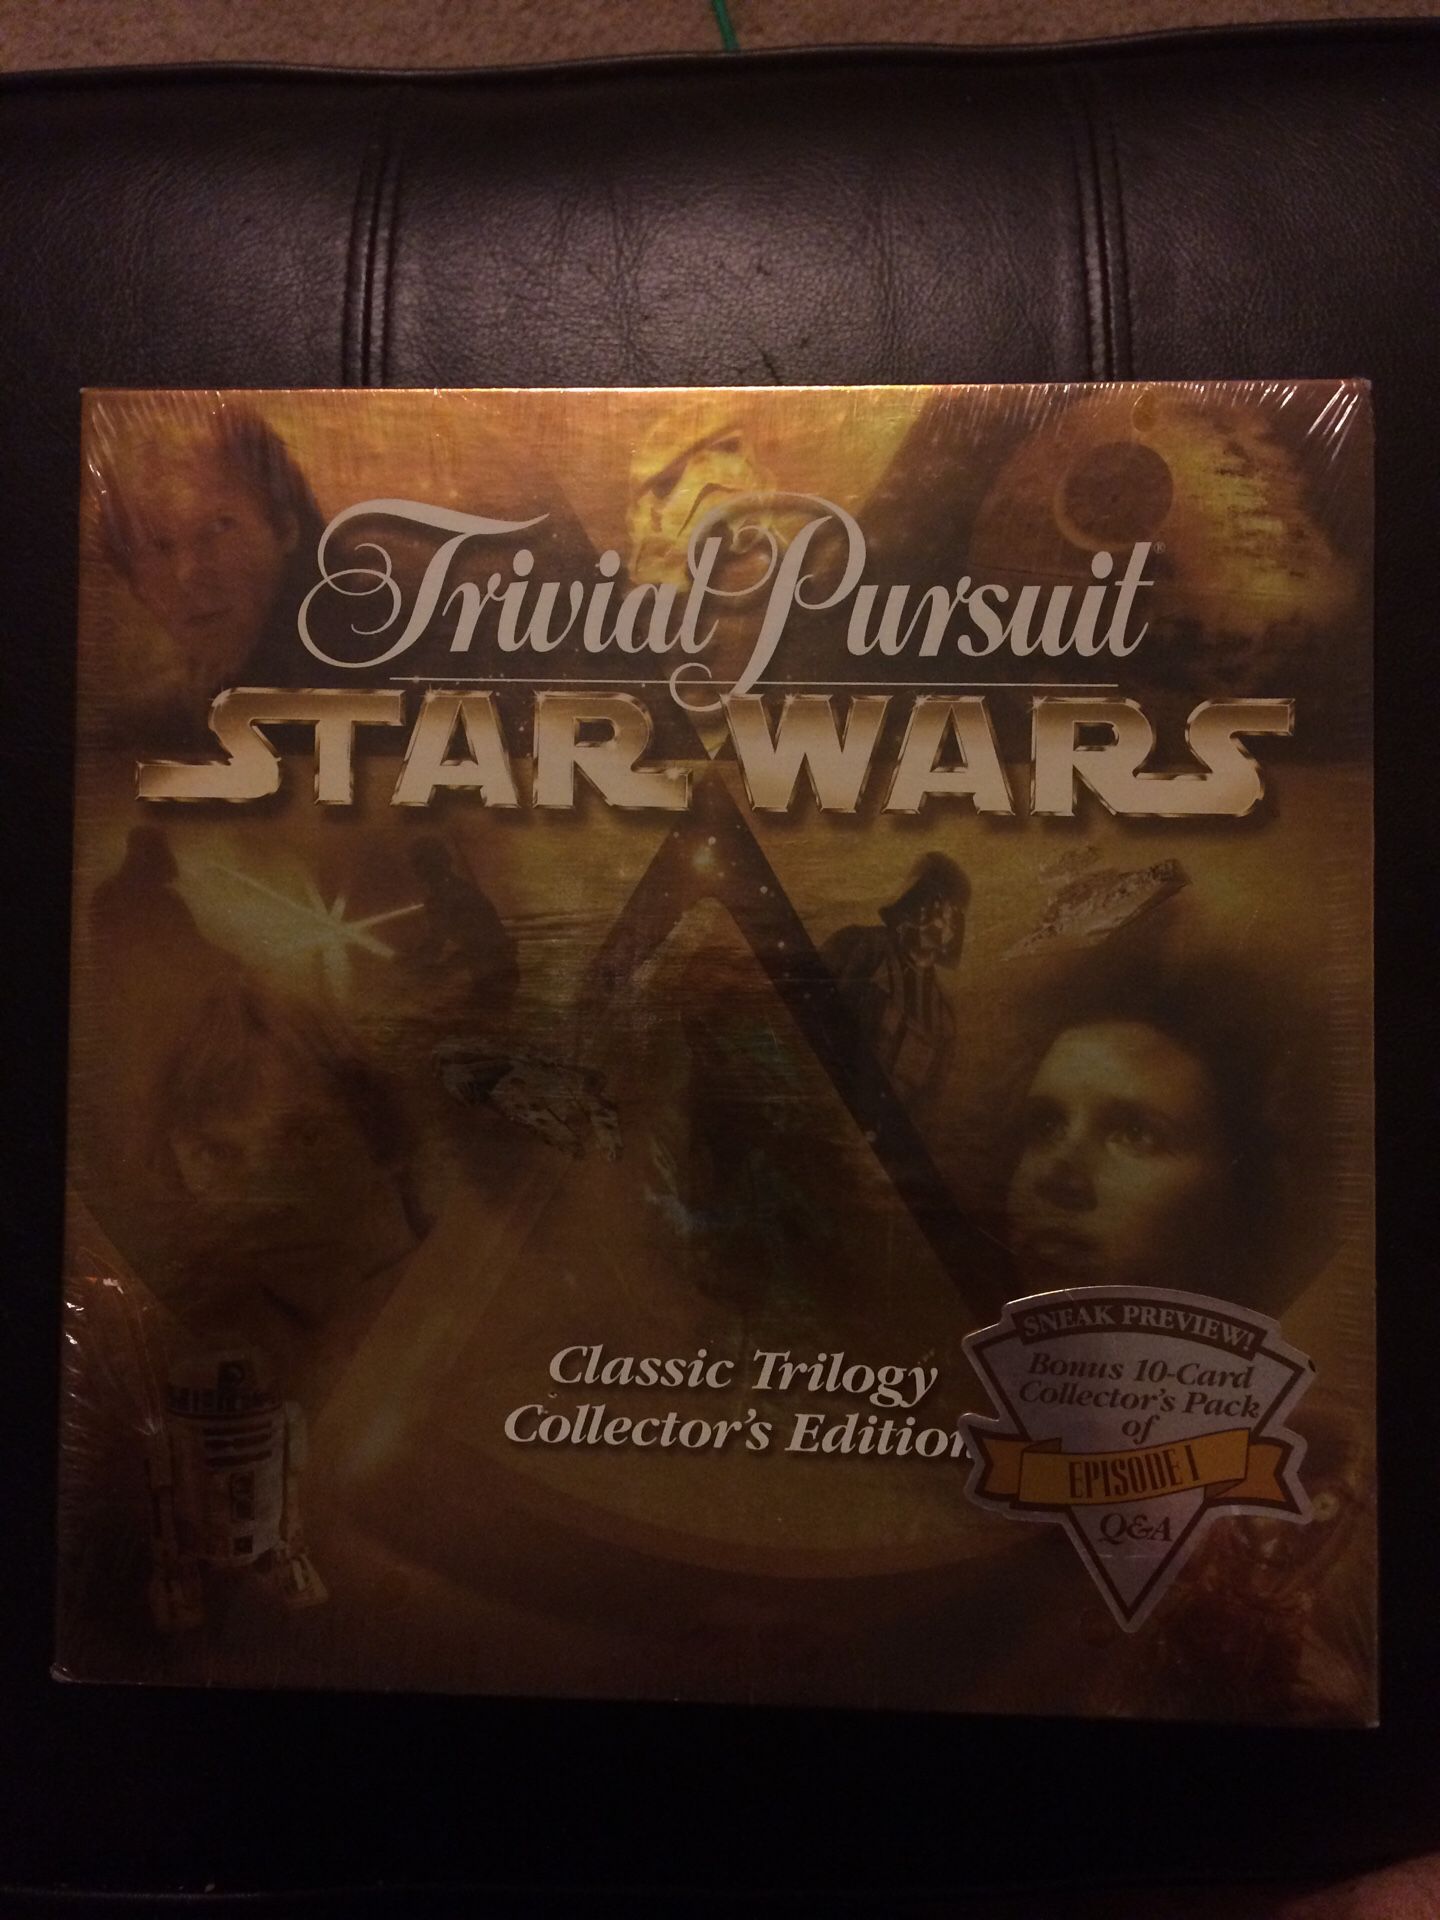 Star Wars trilogy trivial pursuit new